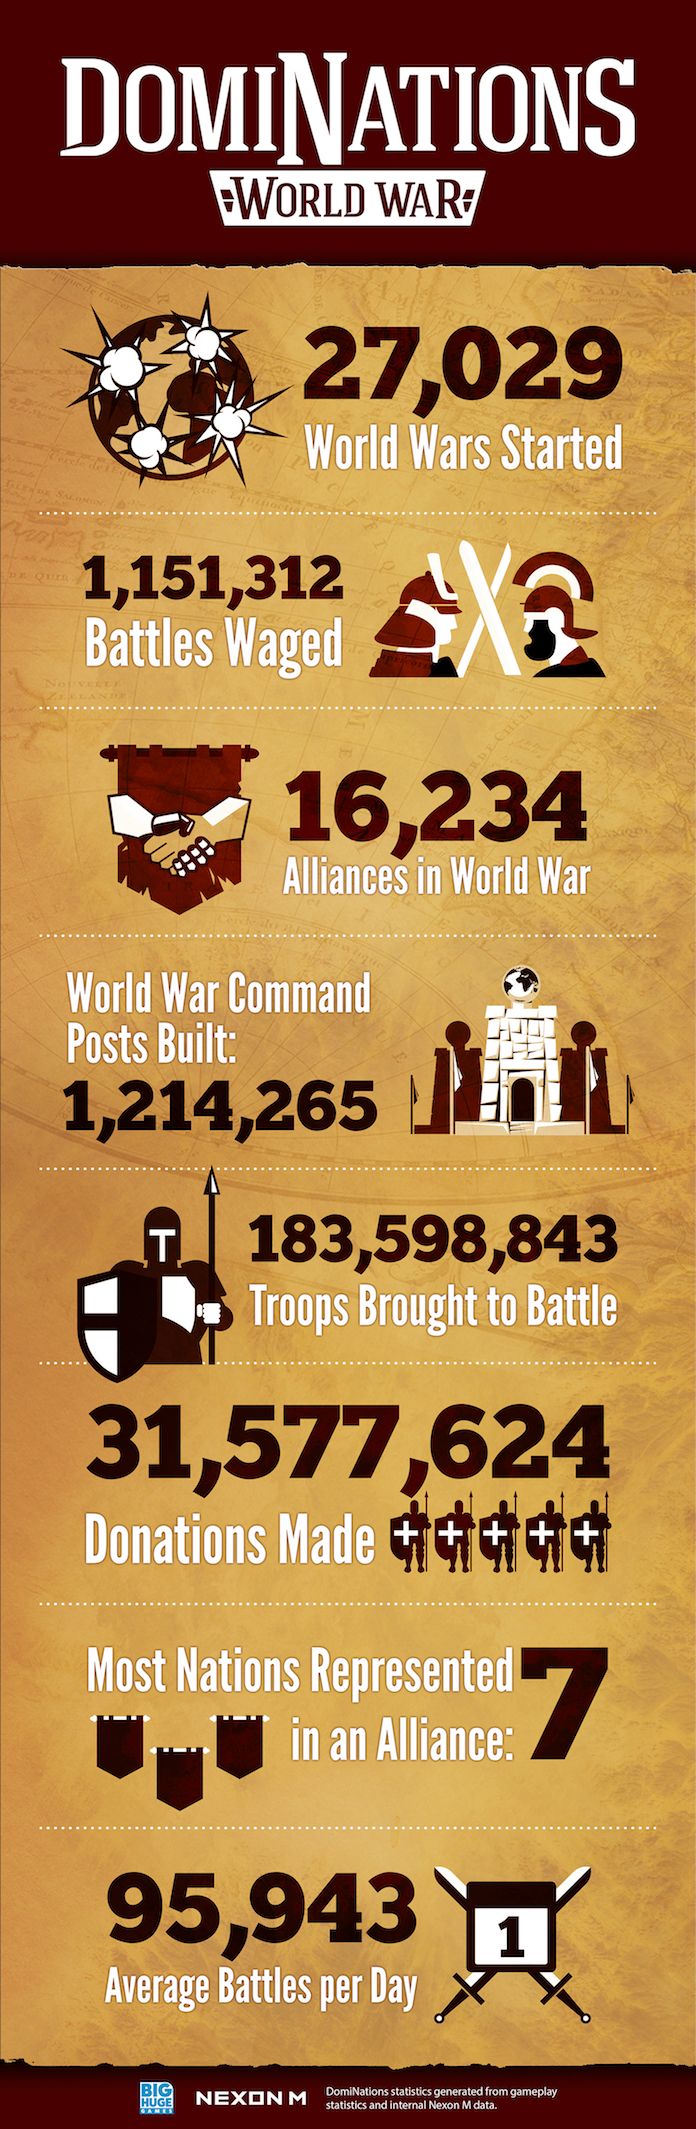 DomiNations World War Infographic-2